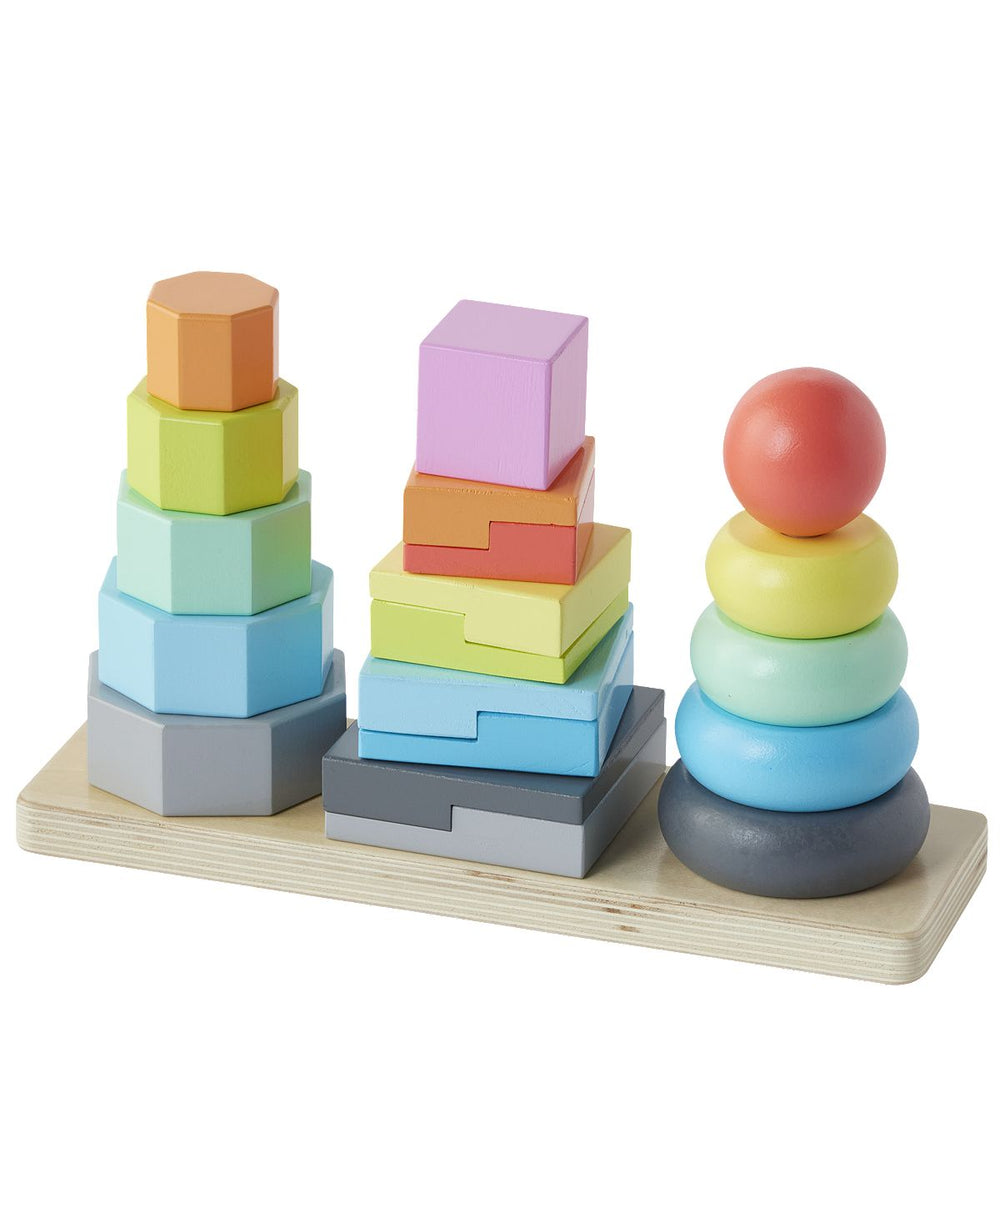 Imaginarium Stack and Play Trio - Multicolor Wooden Educational Toy Set